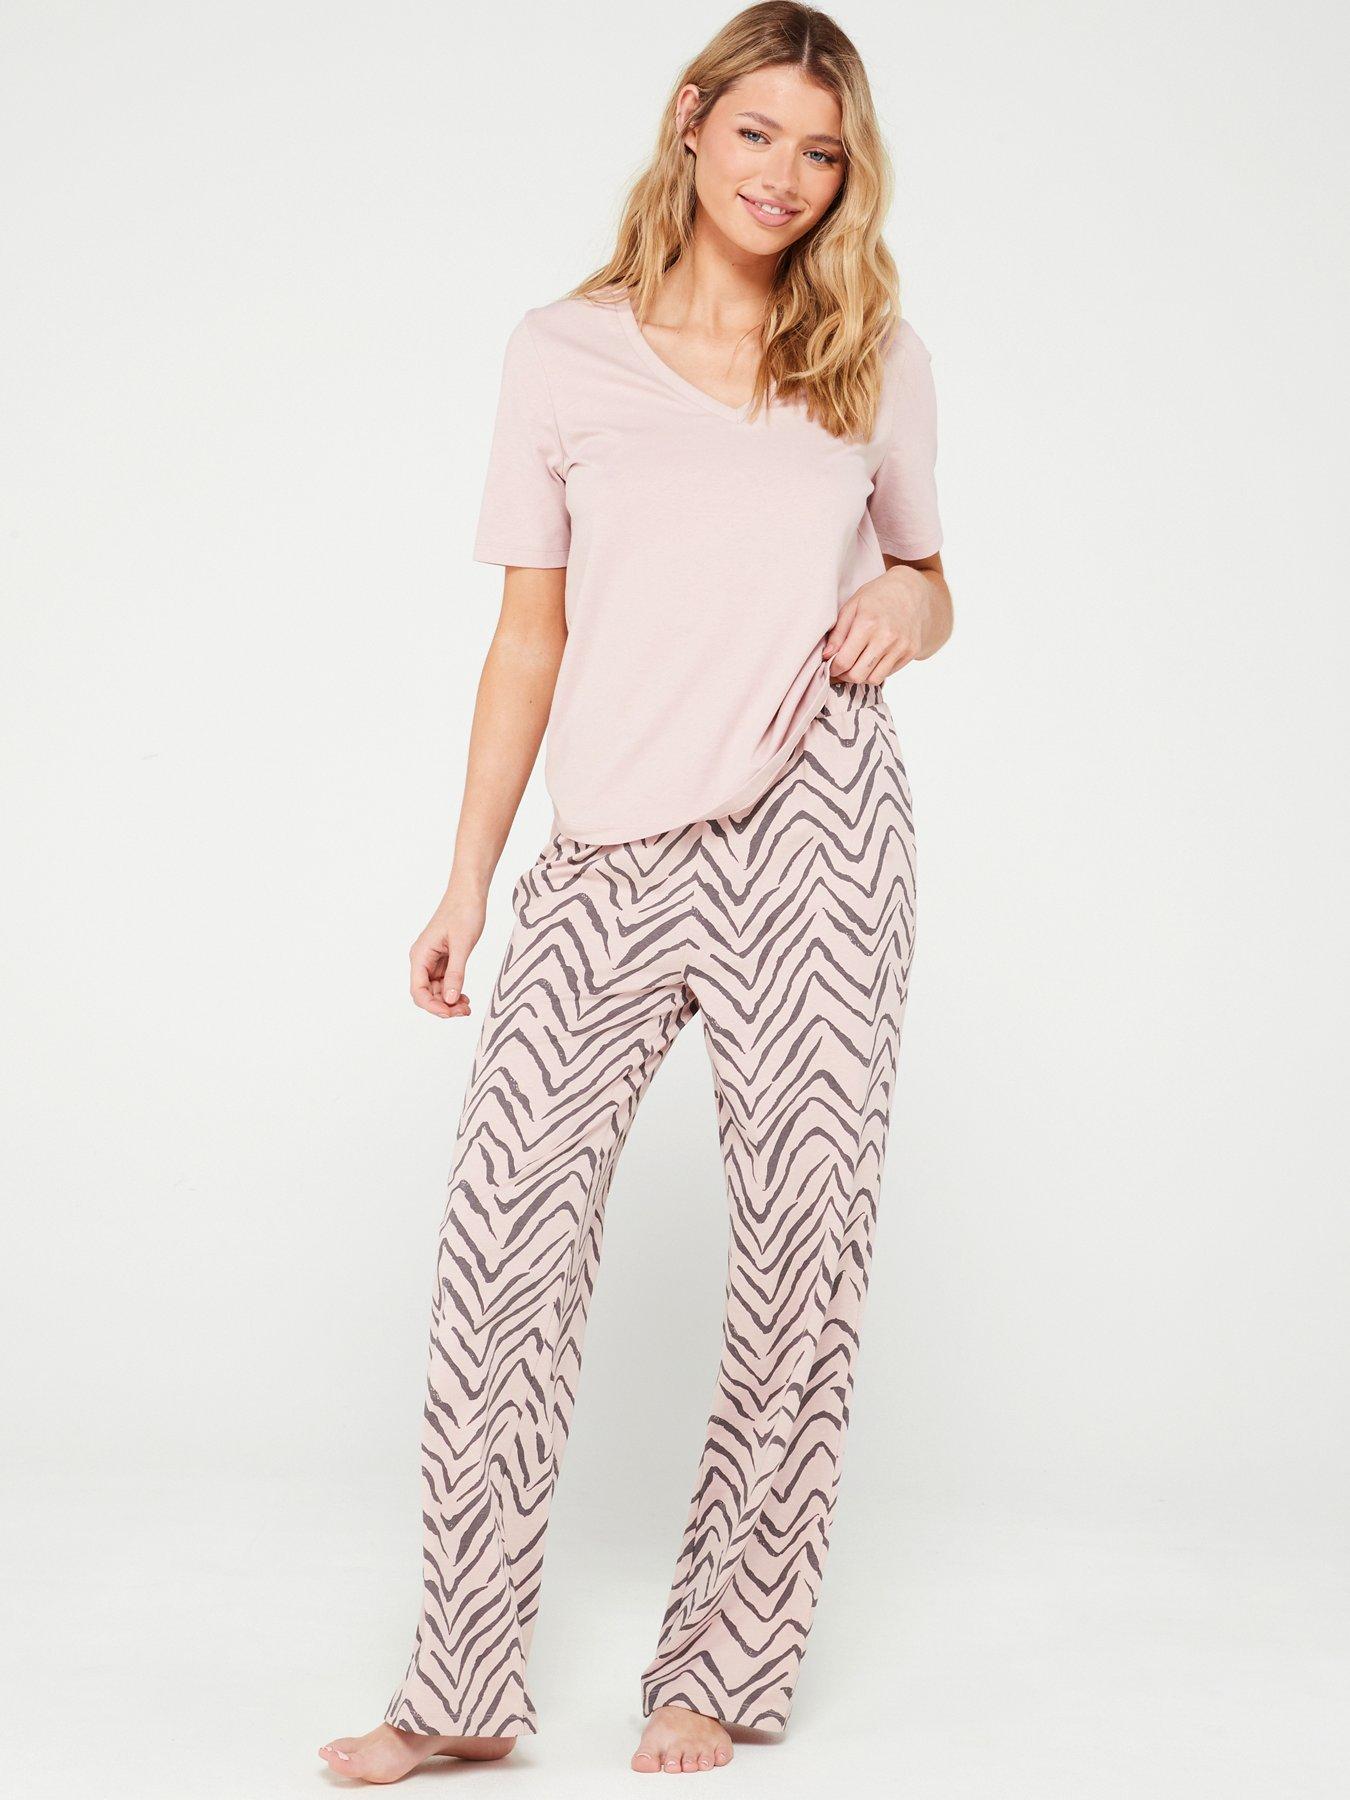 Calvin Klein Girl's Pink Heart Print Fleece Sleep Pajama Pants Size Large  14/16